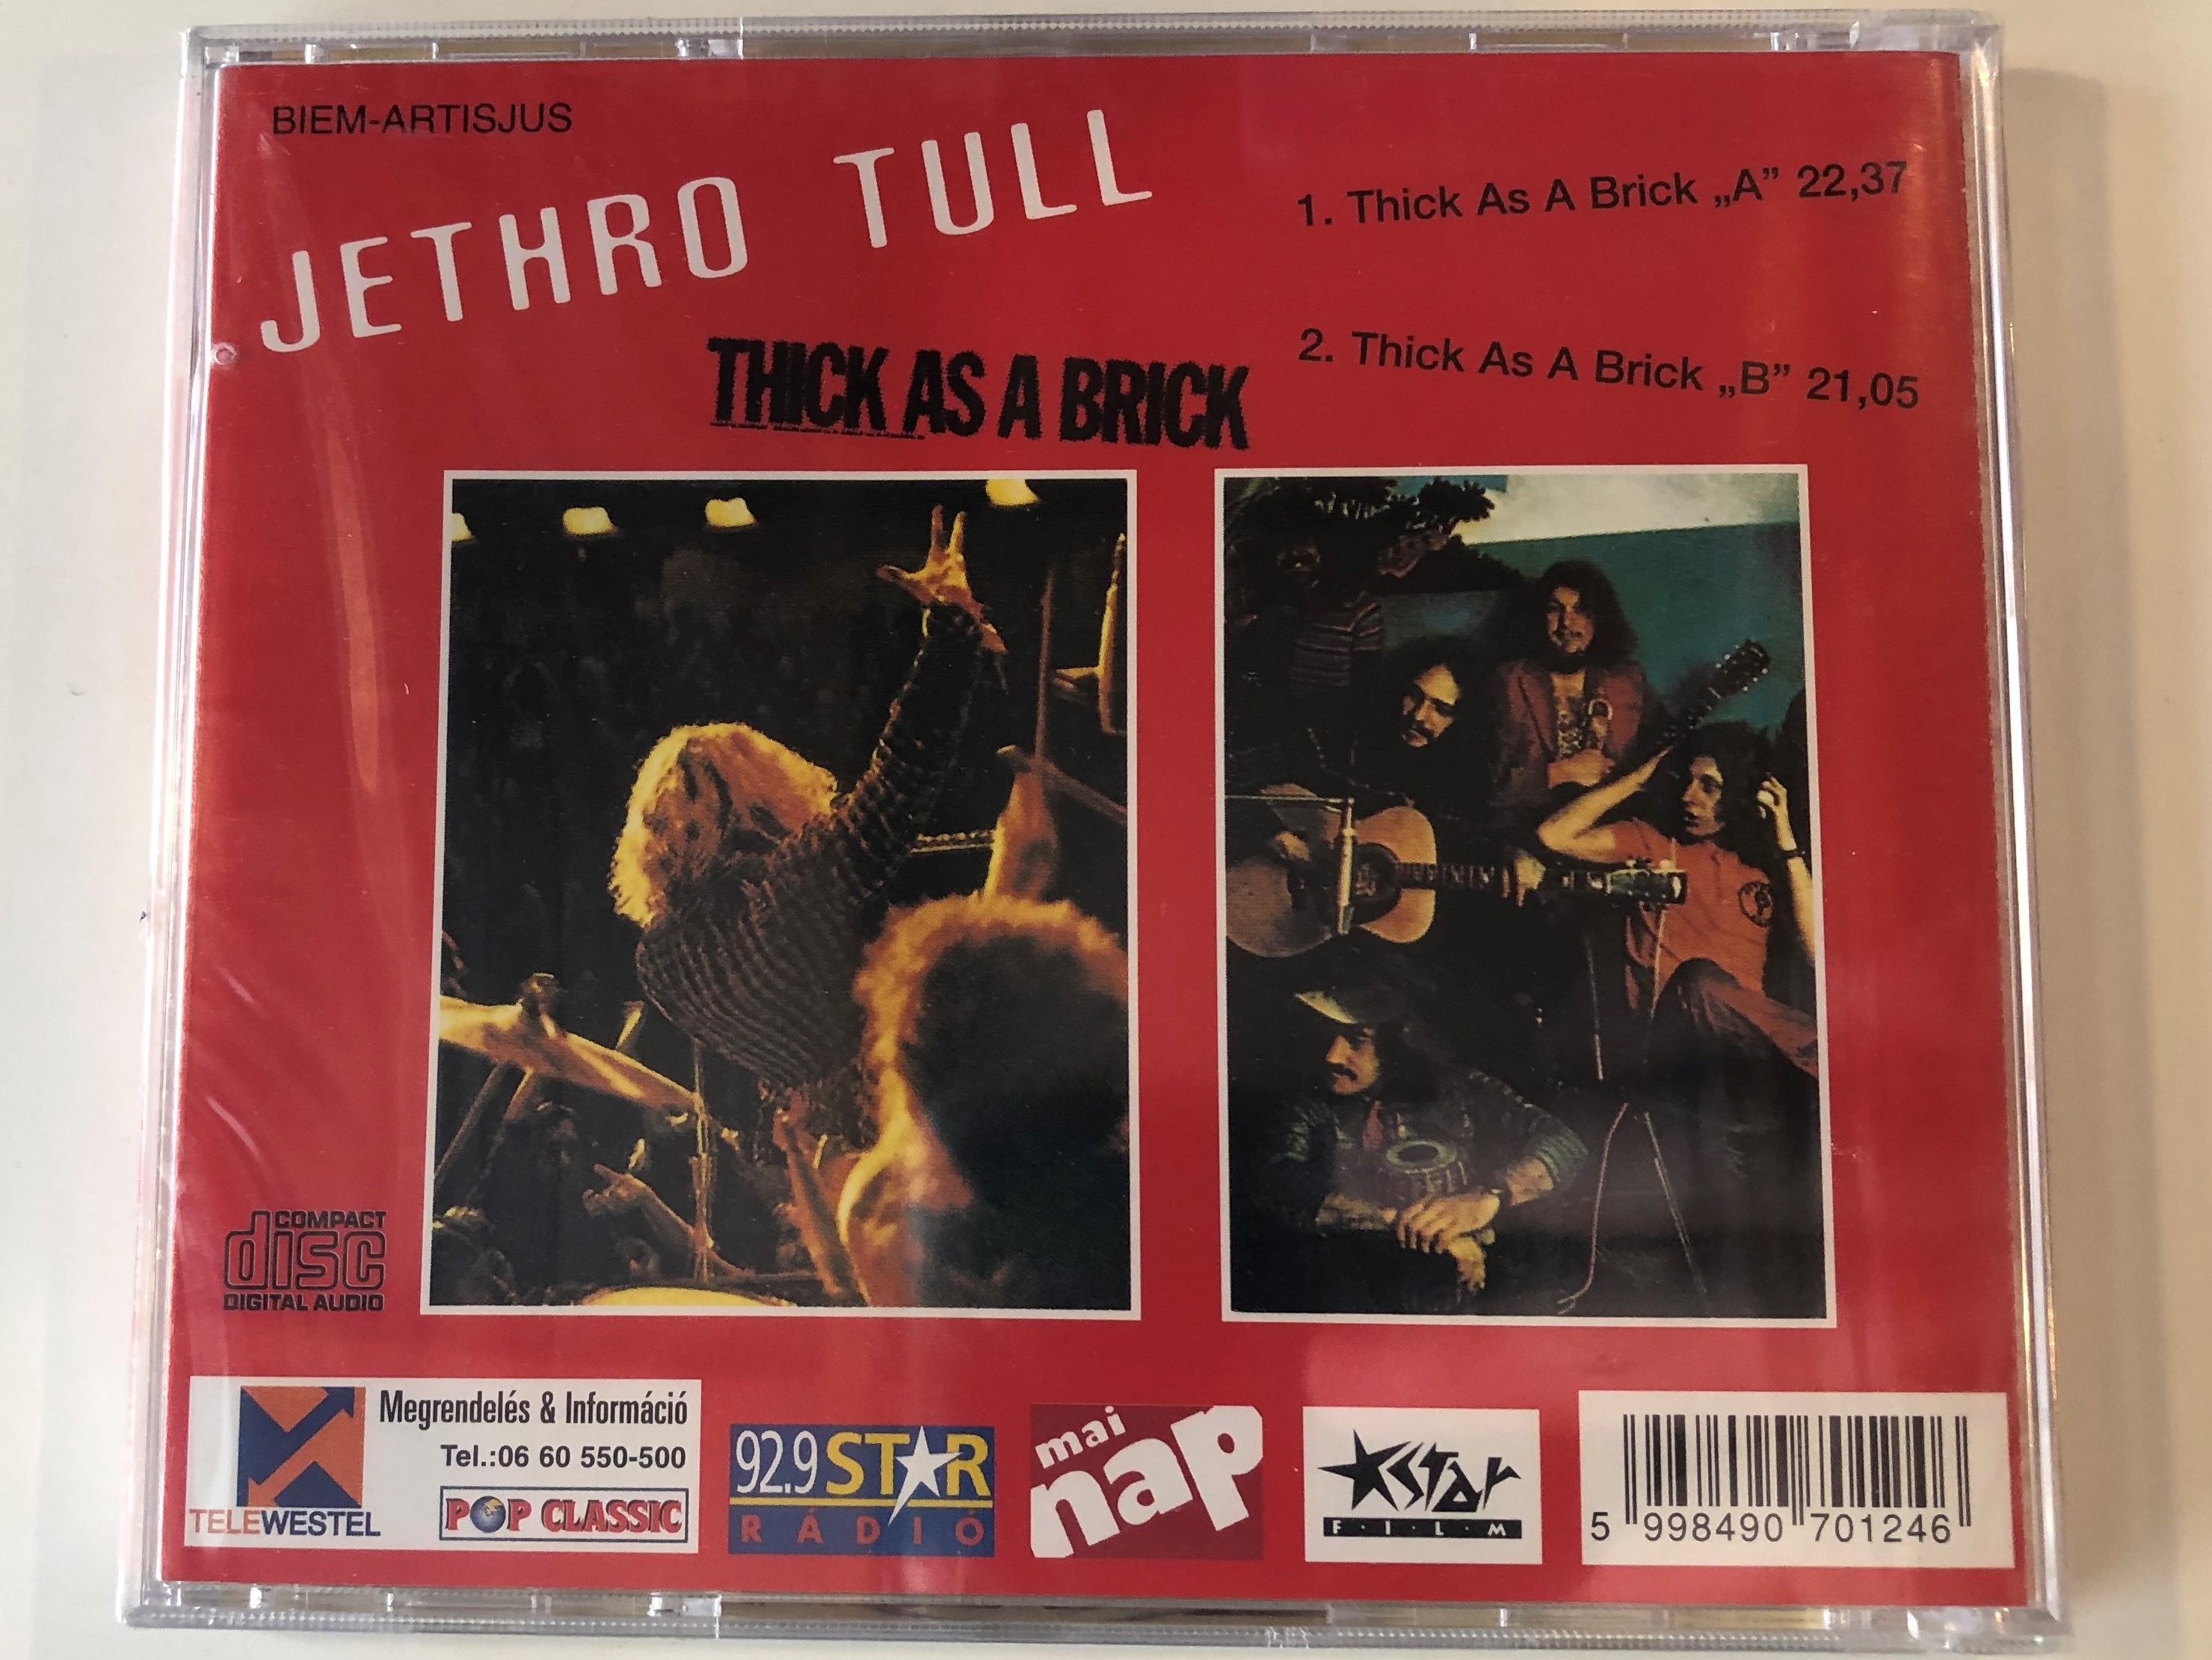 jethro-tull-thick-as-a-brick-pop-classic-audio-cd-5998490701246-2-.jpg